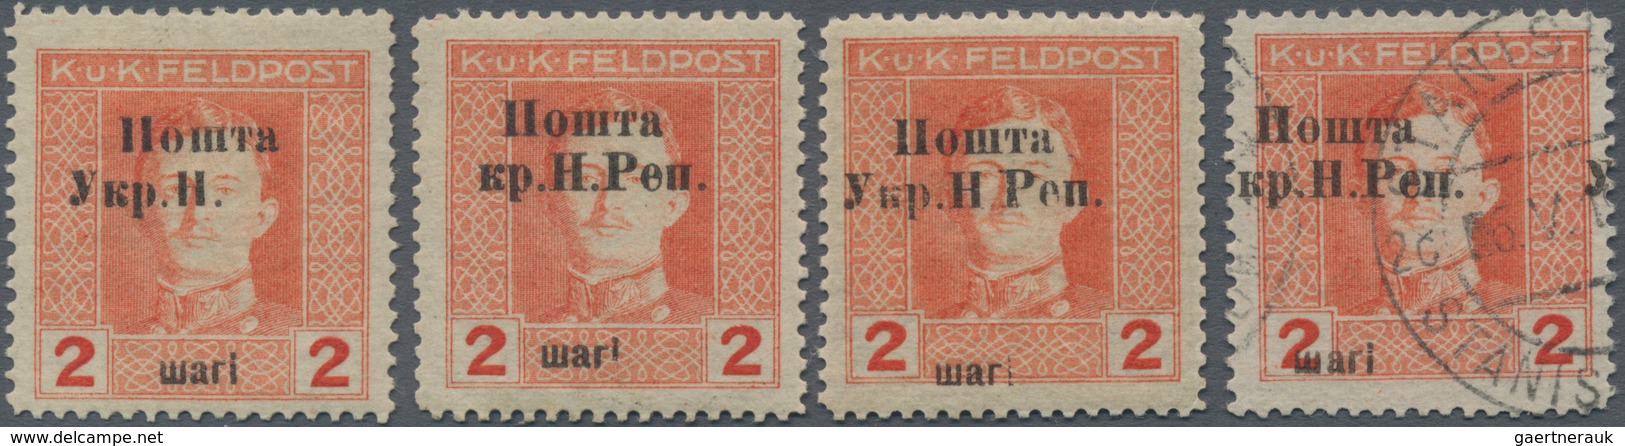 Westukraine: 1919, Postage Stamp. Austrian-Hungarian Field Post With Overprint 2 Schari With Differe - Ucrania